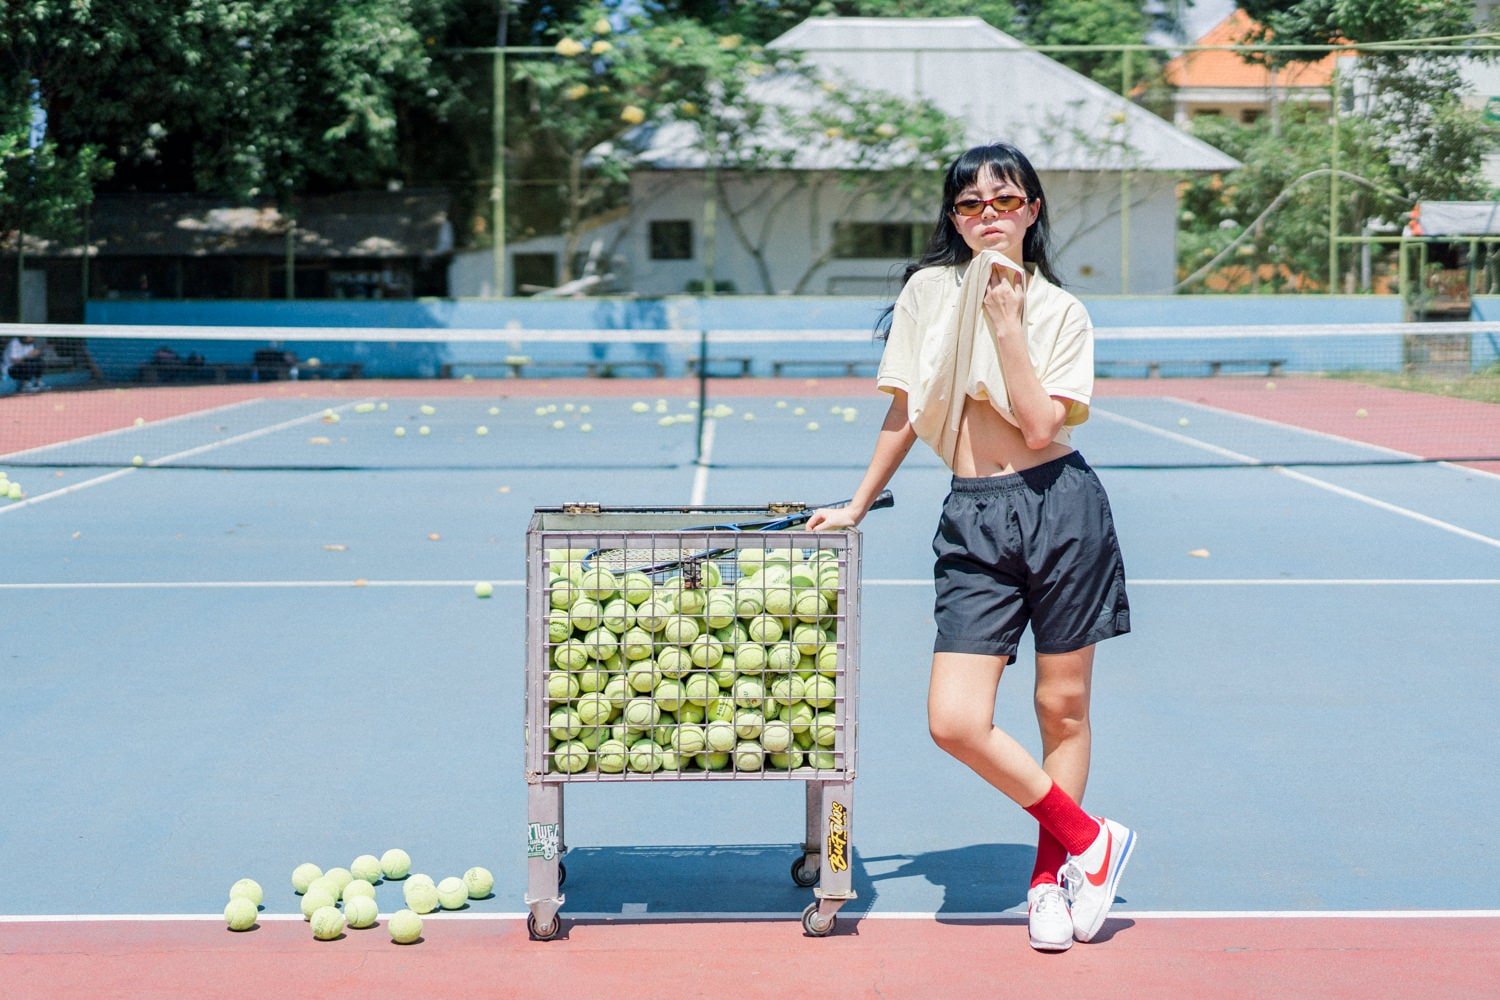 Amazing portrait photo in tennis court